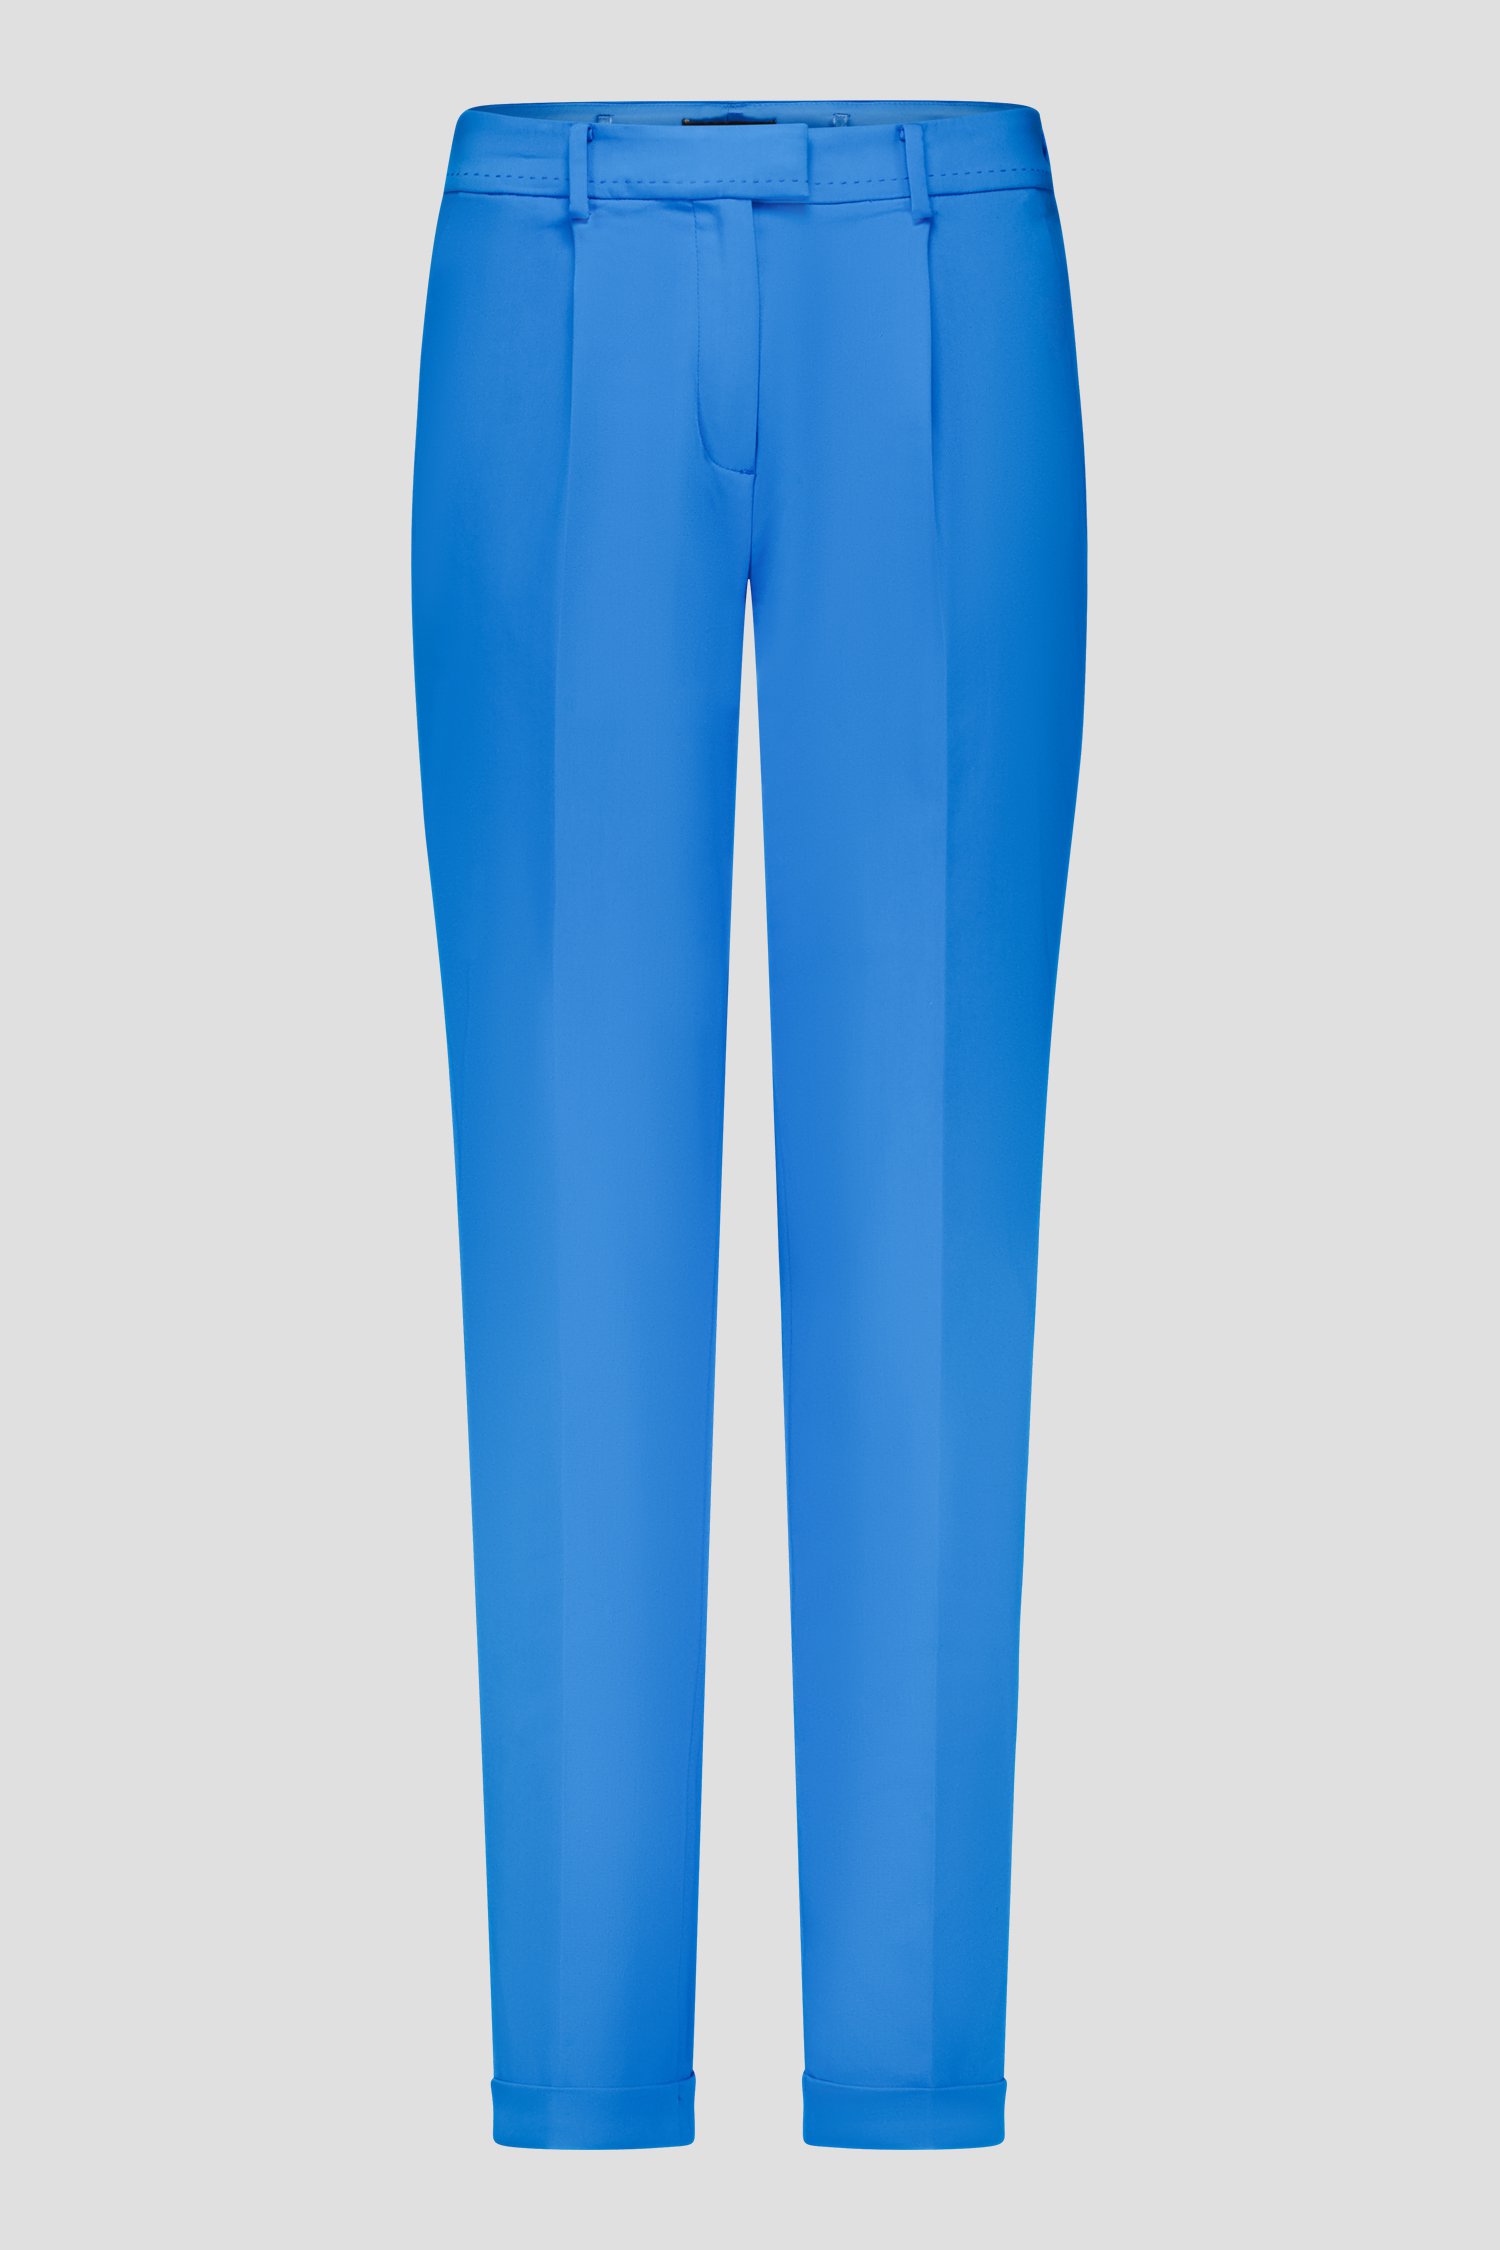 Blauwe geklede broek van More & More voor Dames